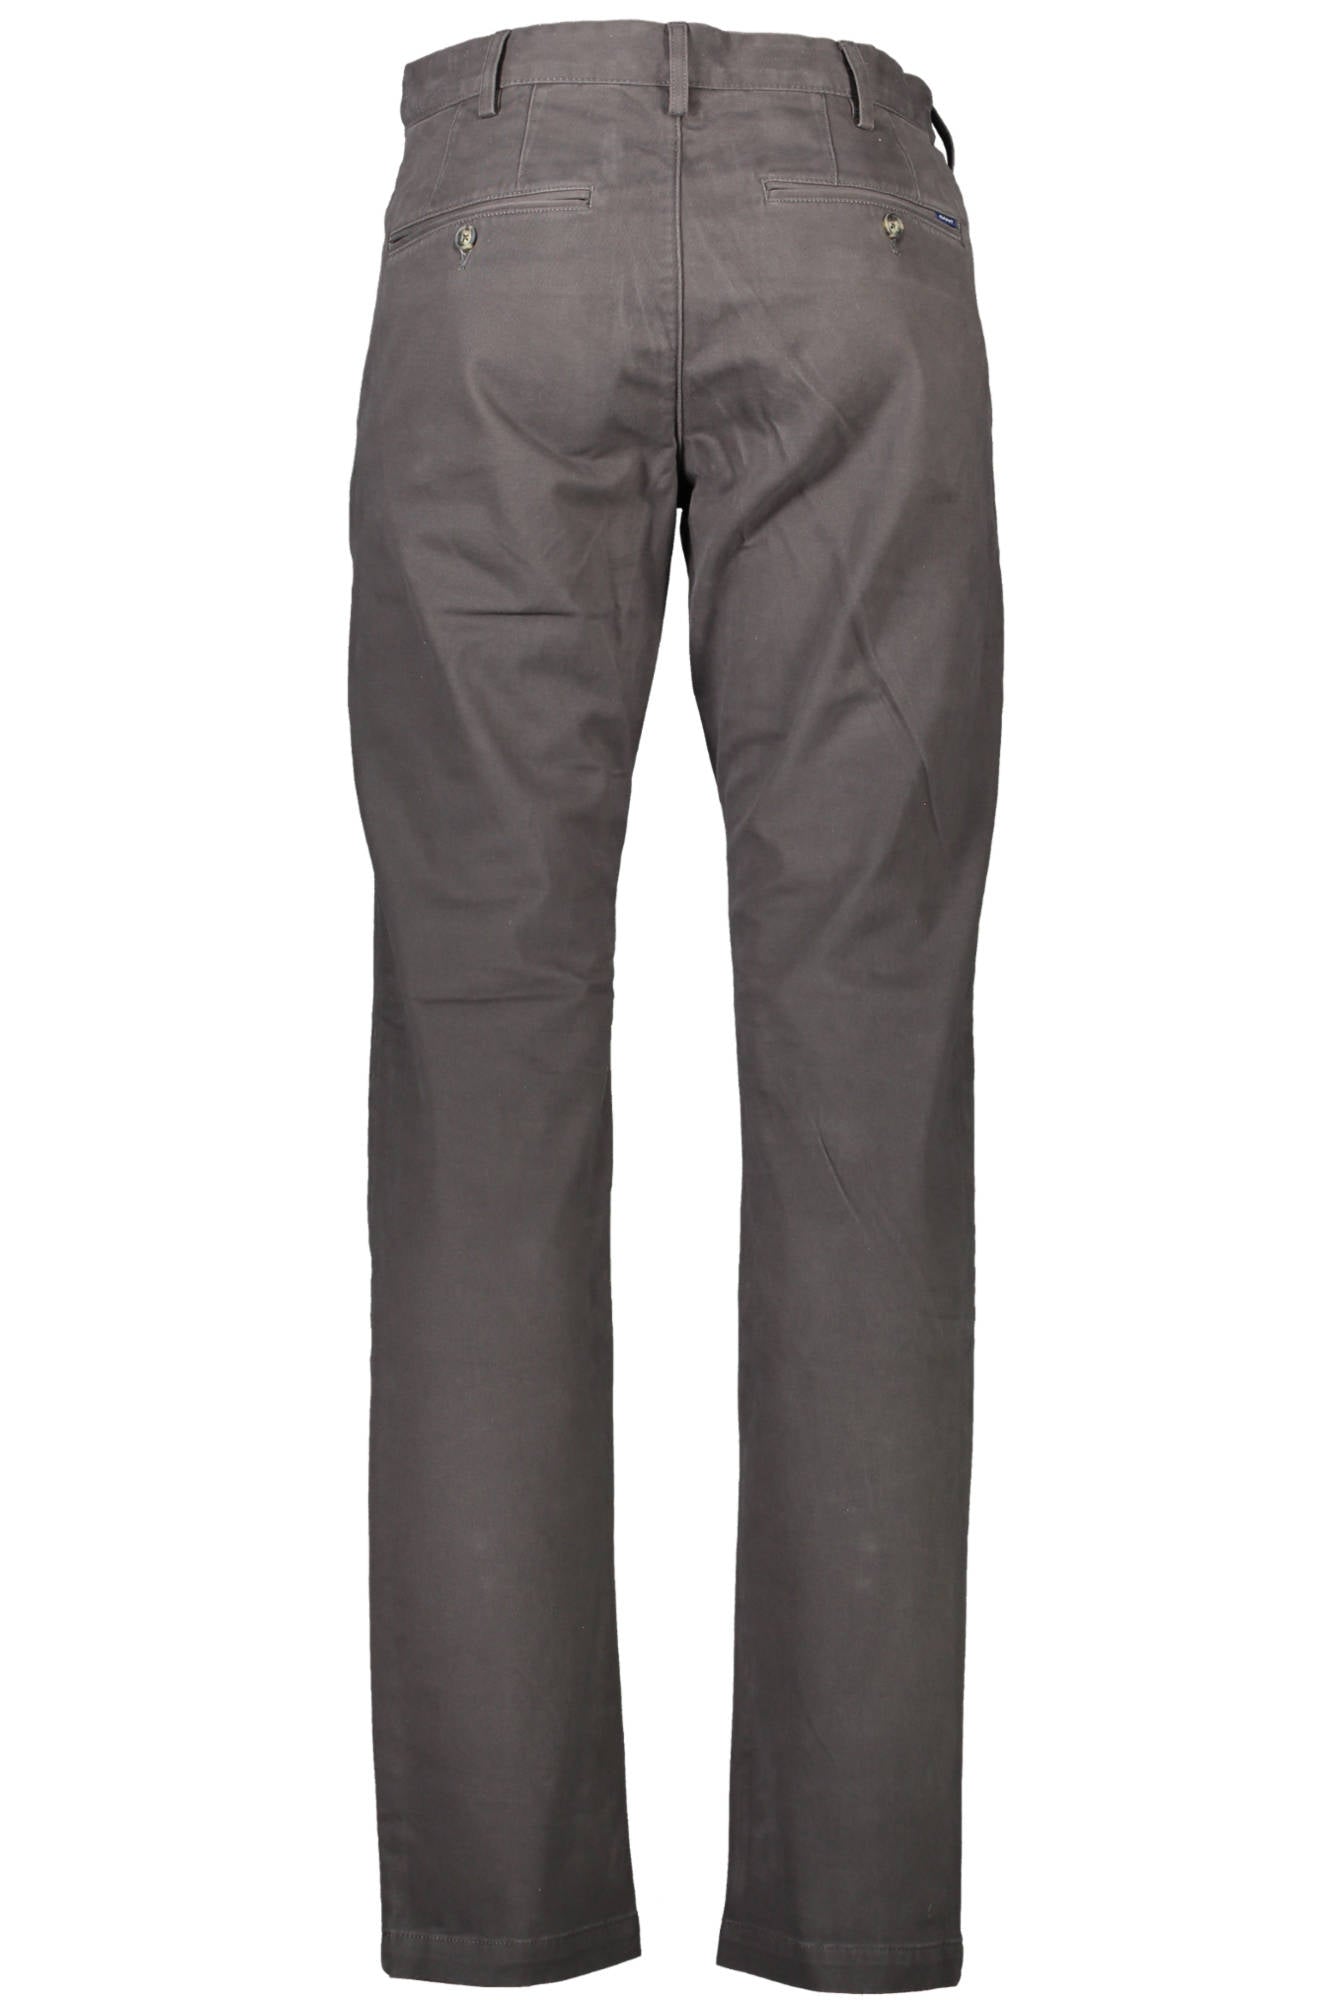 Gant Gray Jeans & Pant - Fizigo